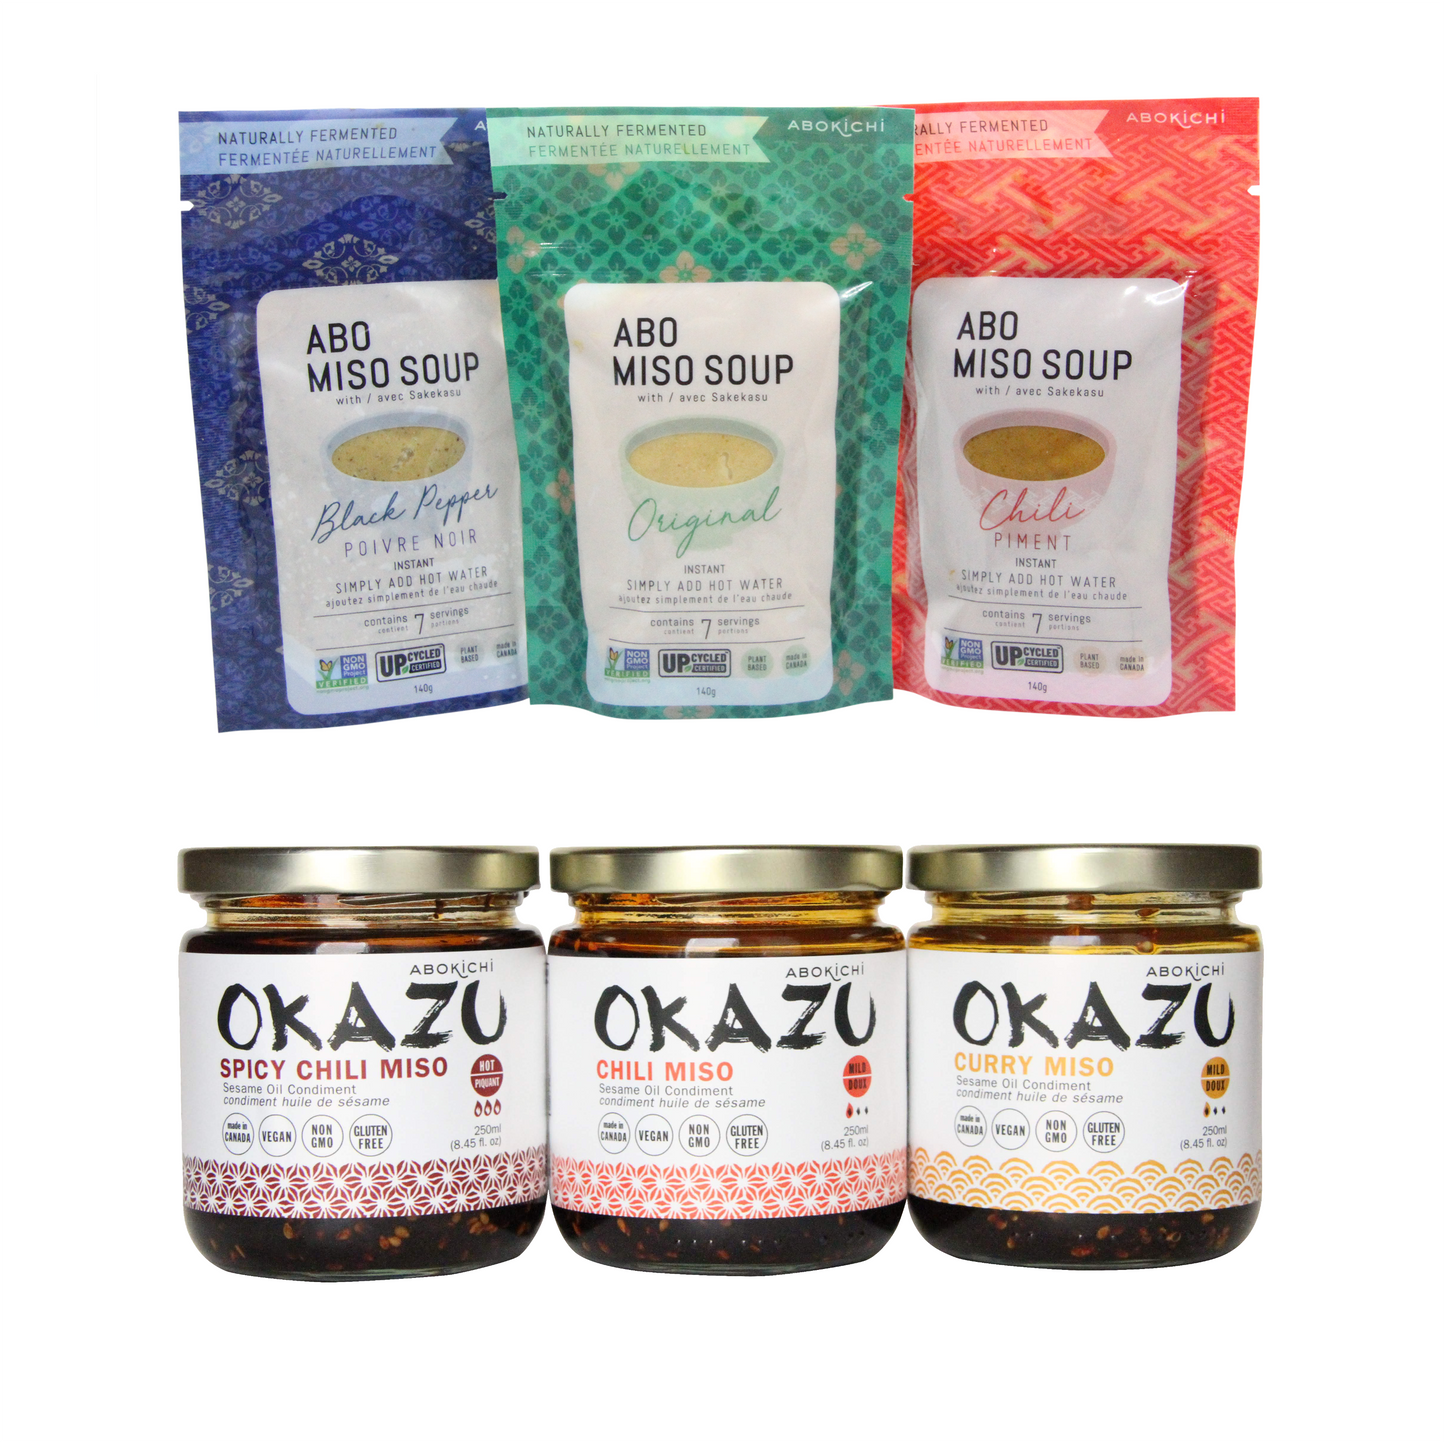 OKAZU and ABO Miso Soup Tasting set